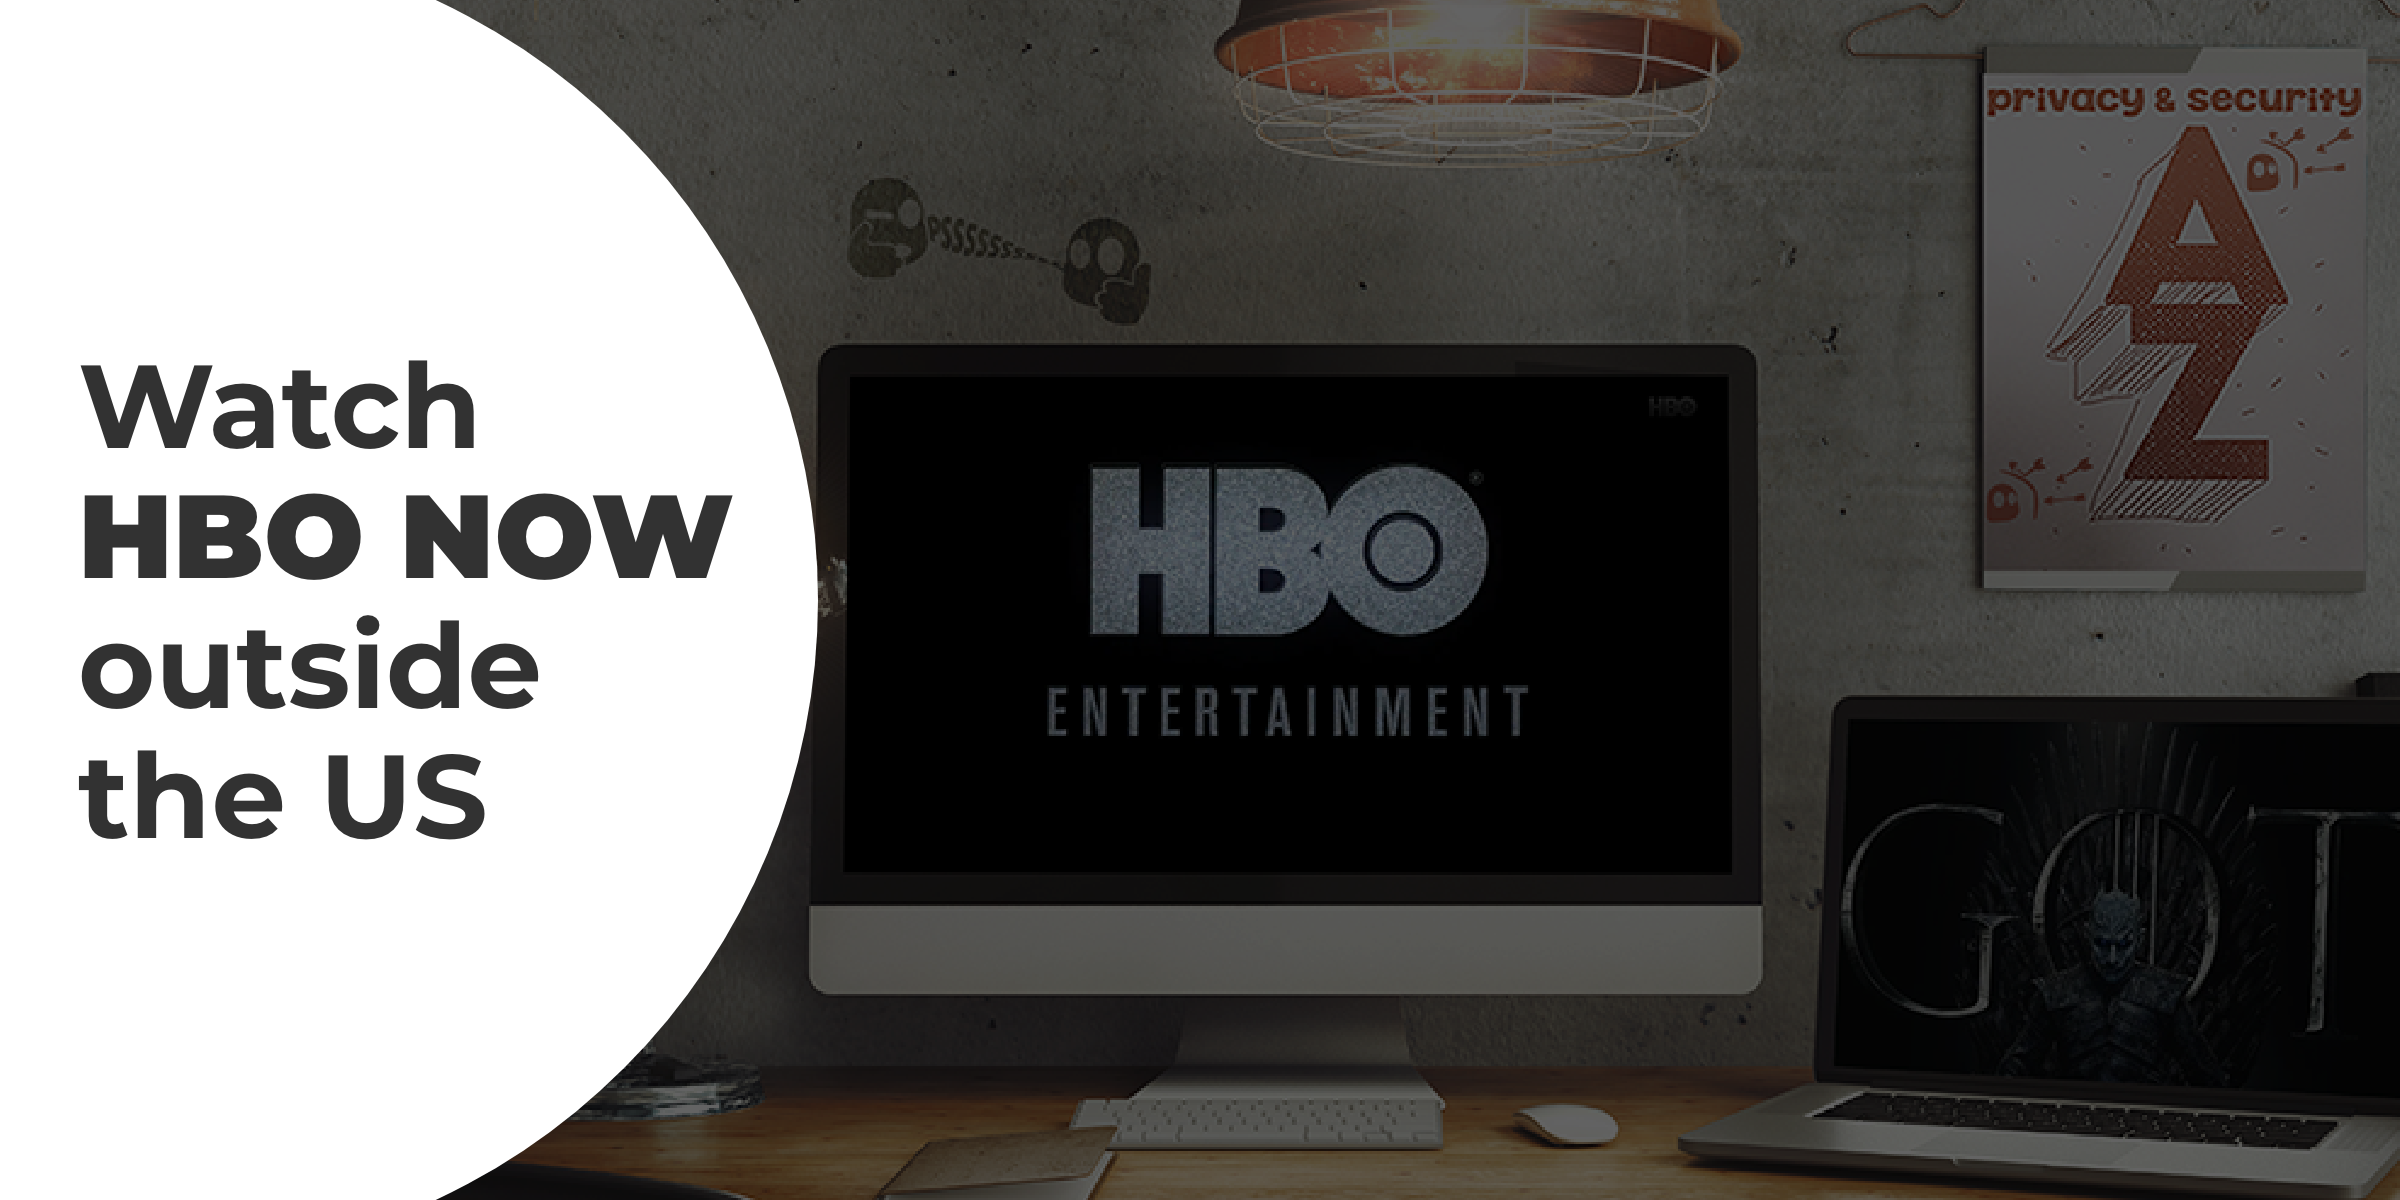 Chernobyl Season 1 live stream watch online HBO